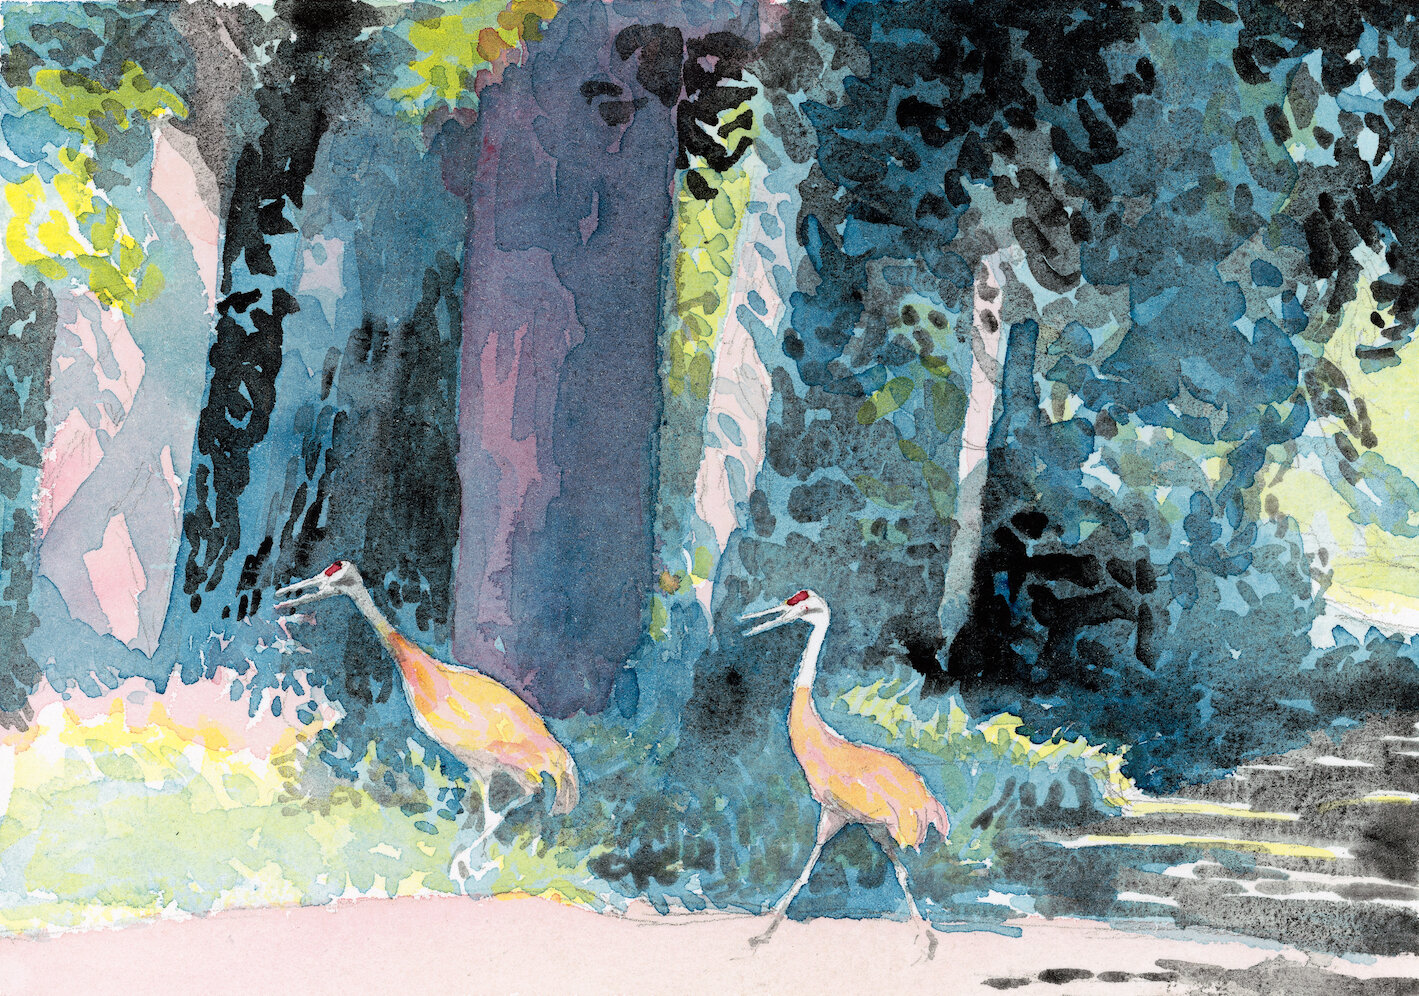 Sandhill Cranes Crossing a Road